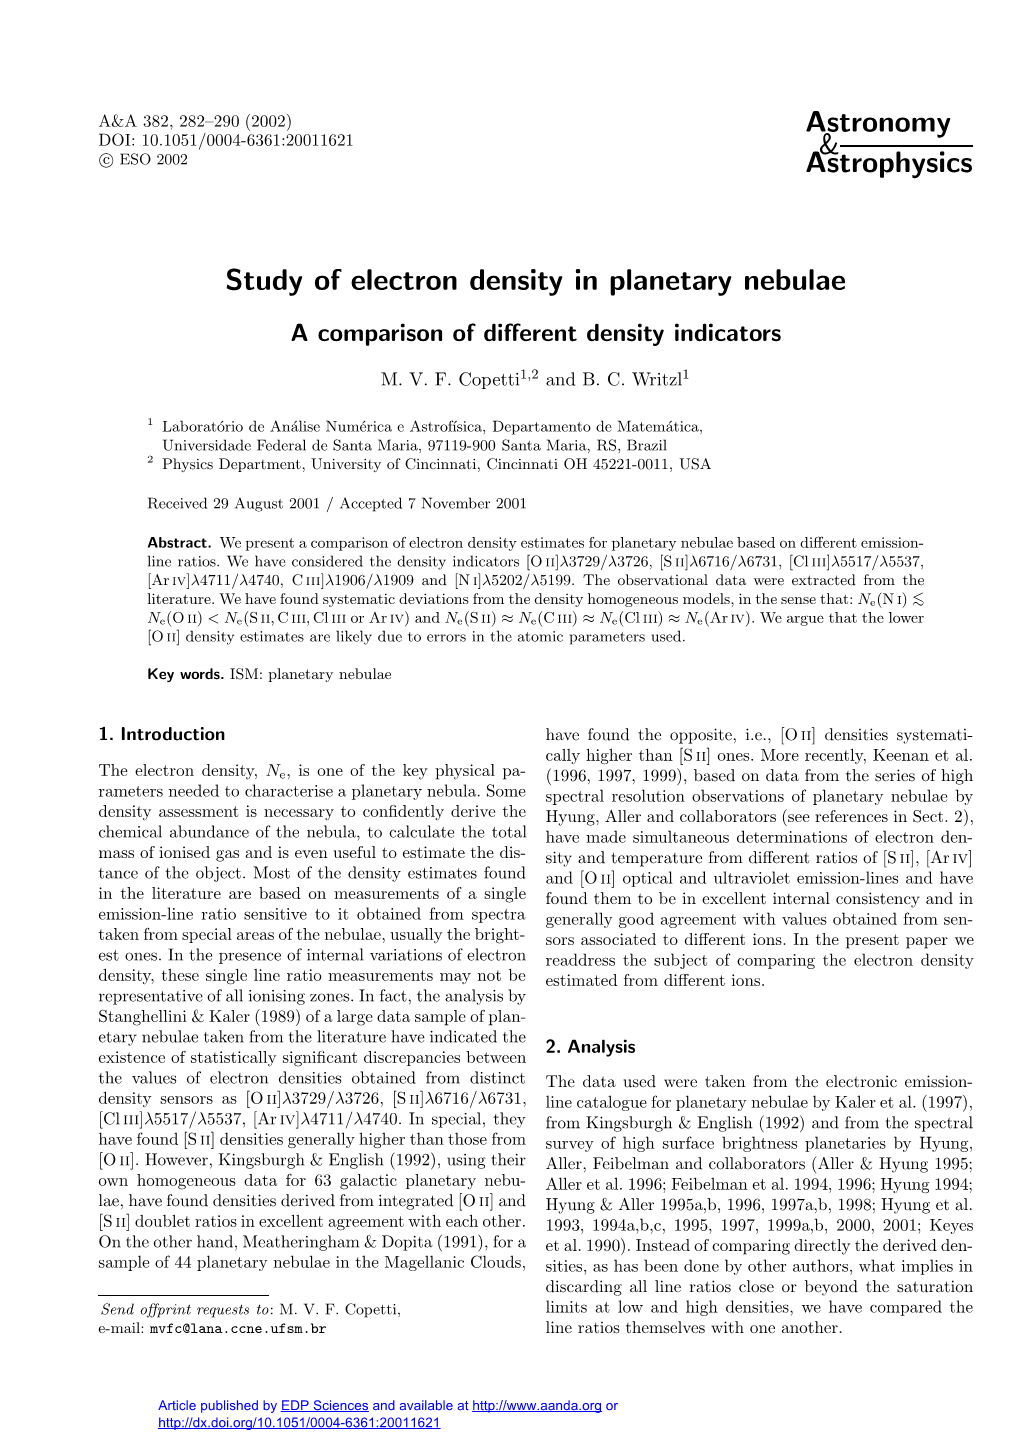 Study of Electron Density in Planetary Nebulae